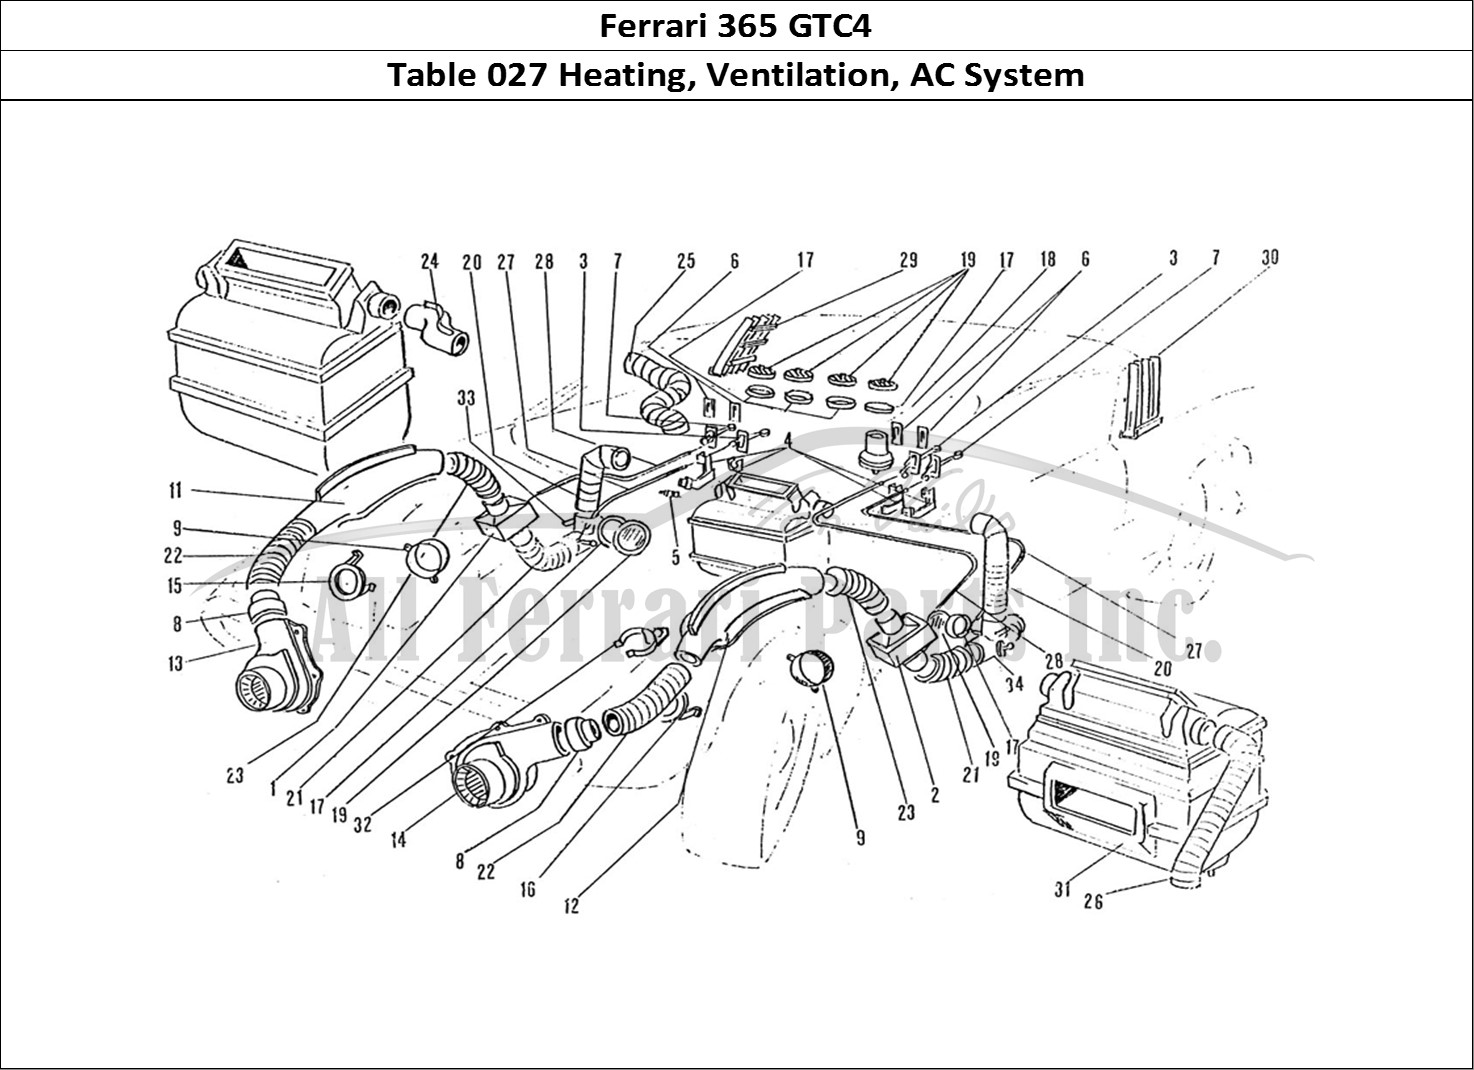 Ferrari Parts Ferrari 365 GTC4 (Coachwork) Page 027 Heaters & Blowers